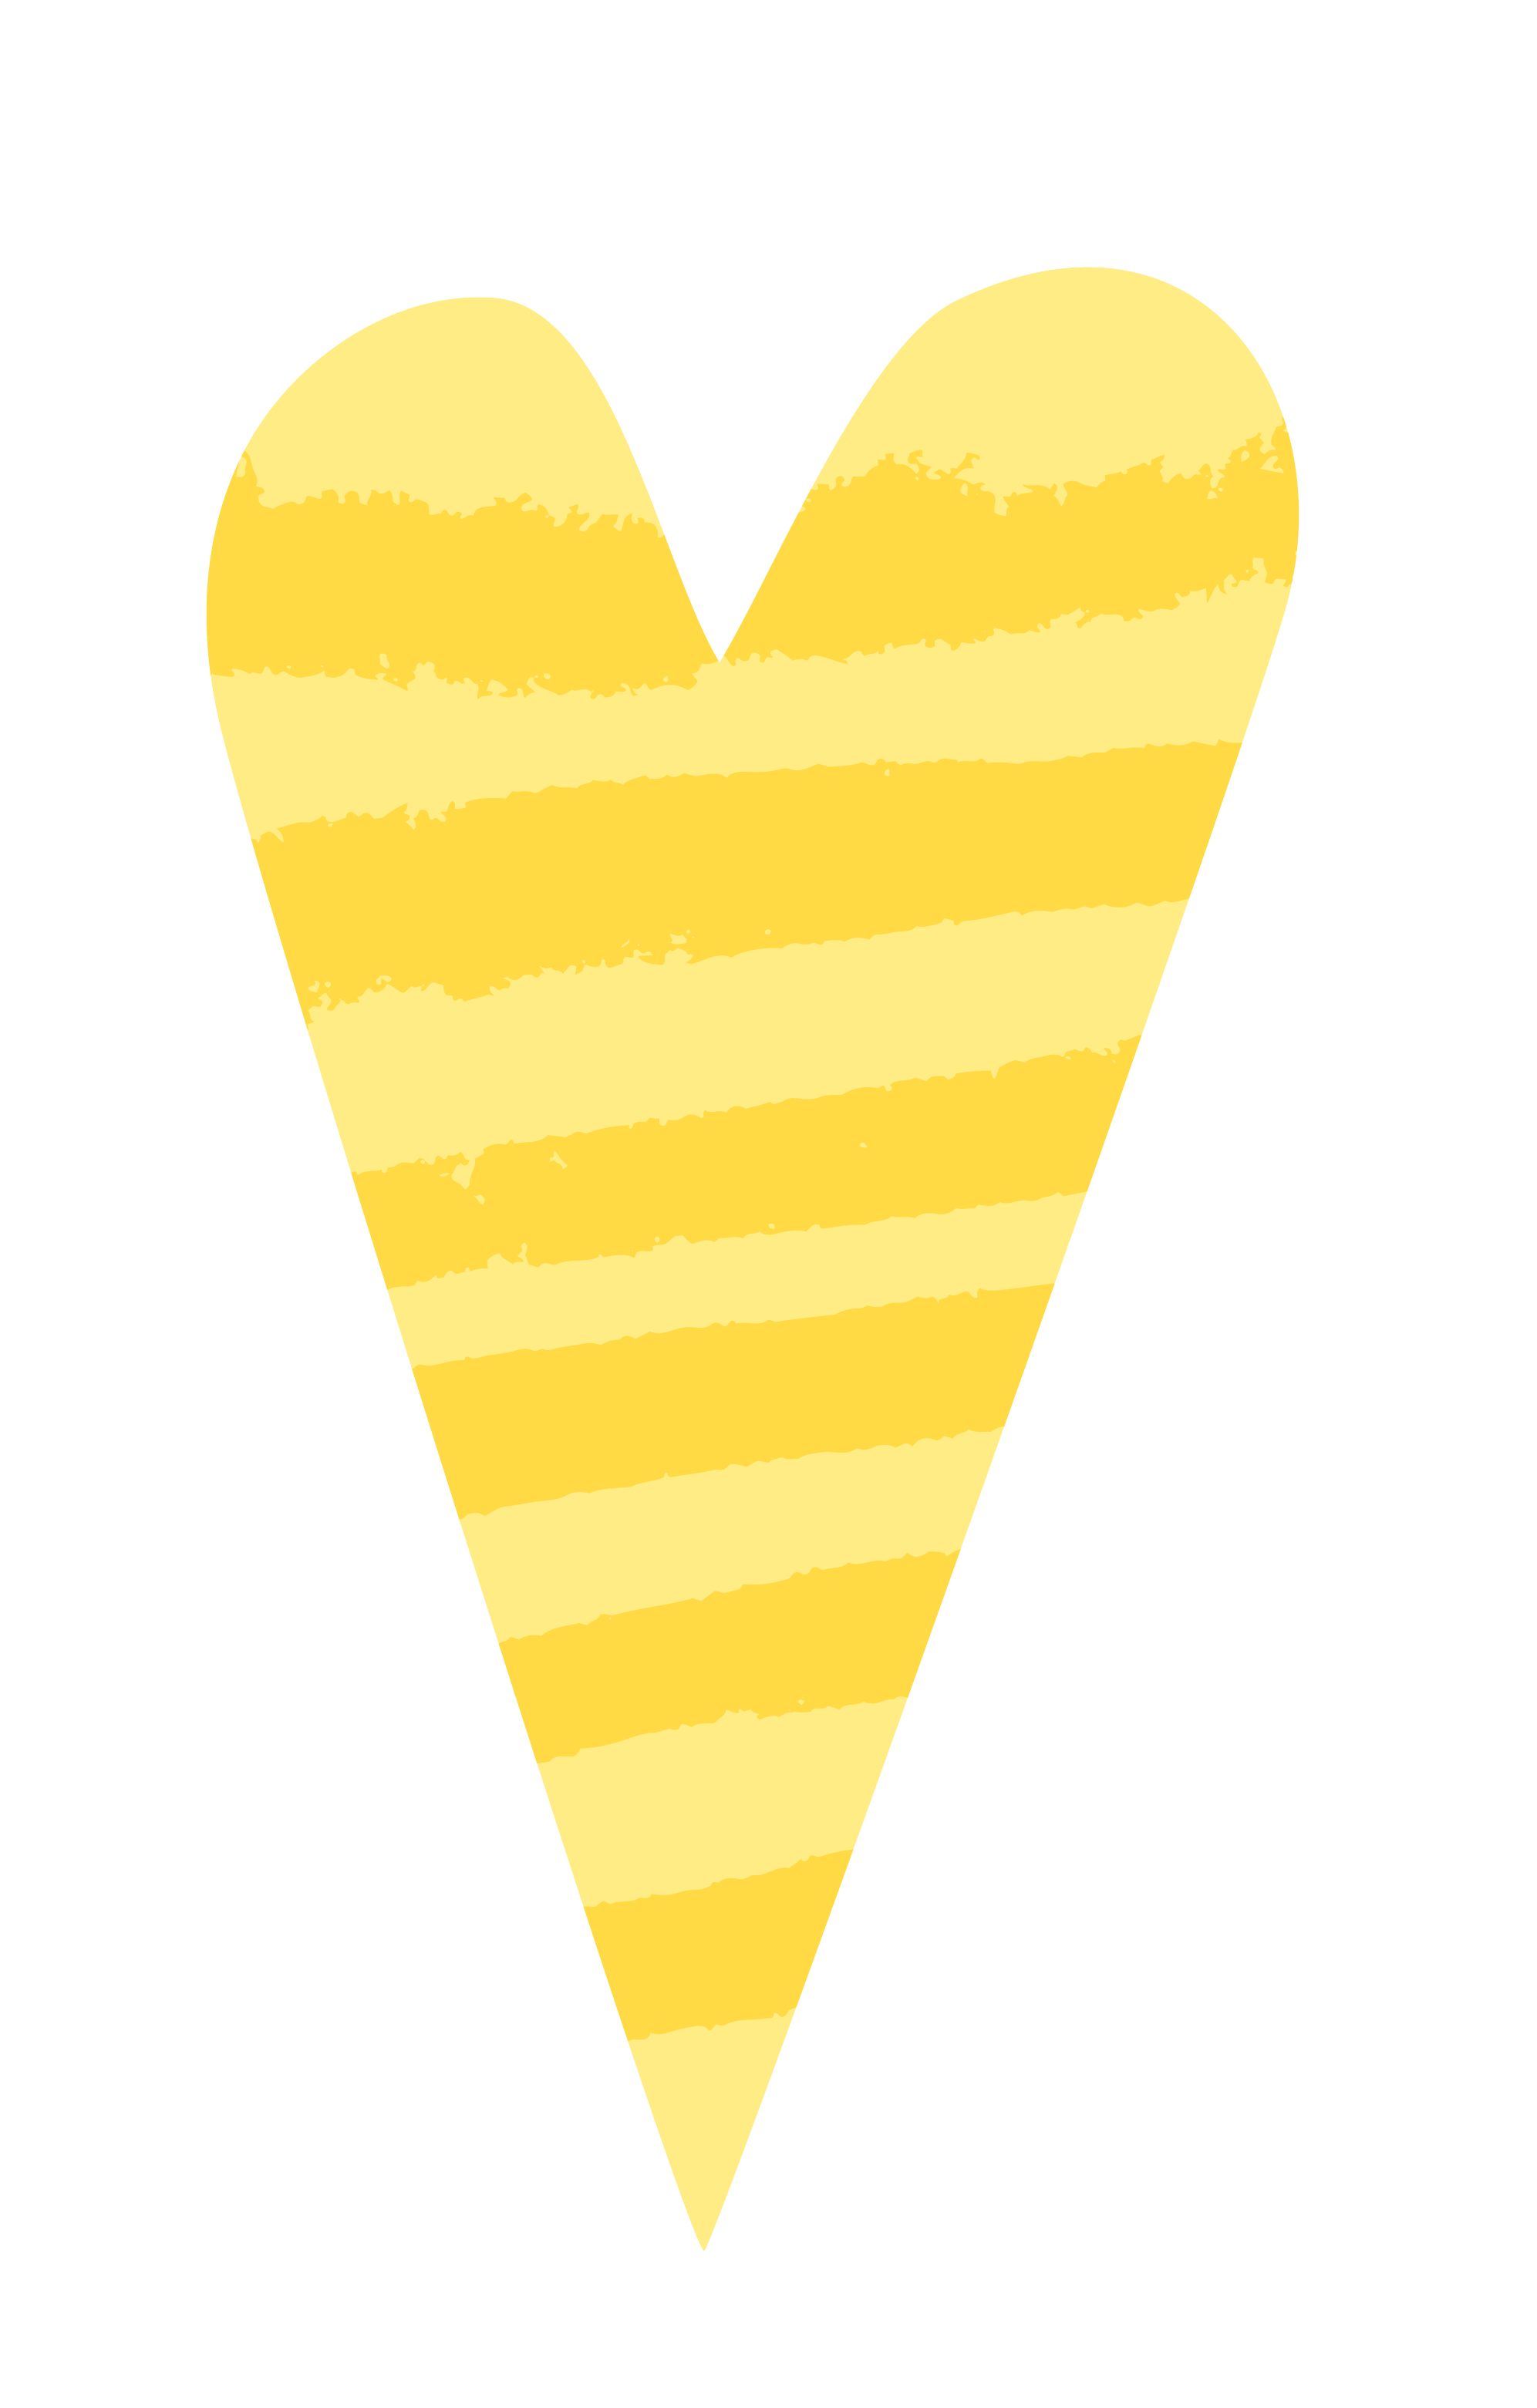 Yellow striped heart illustration